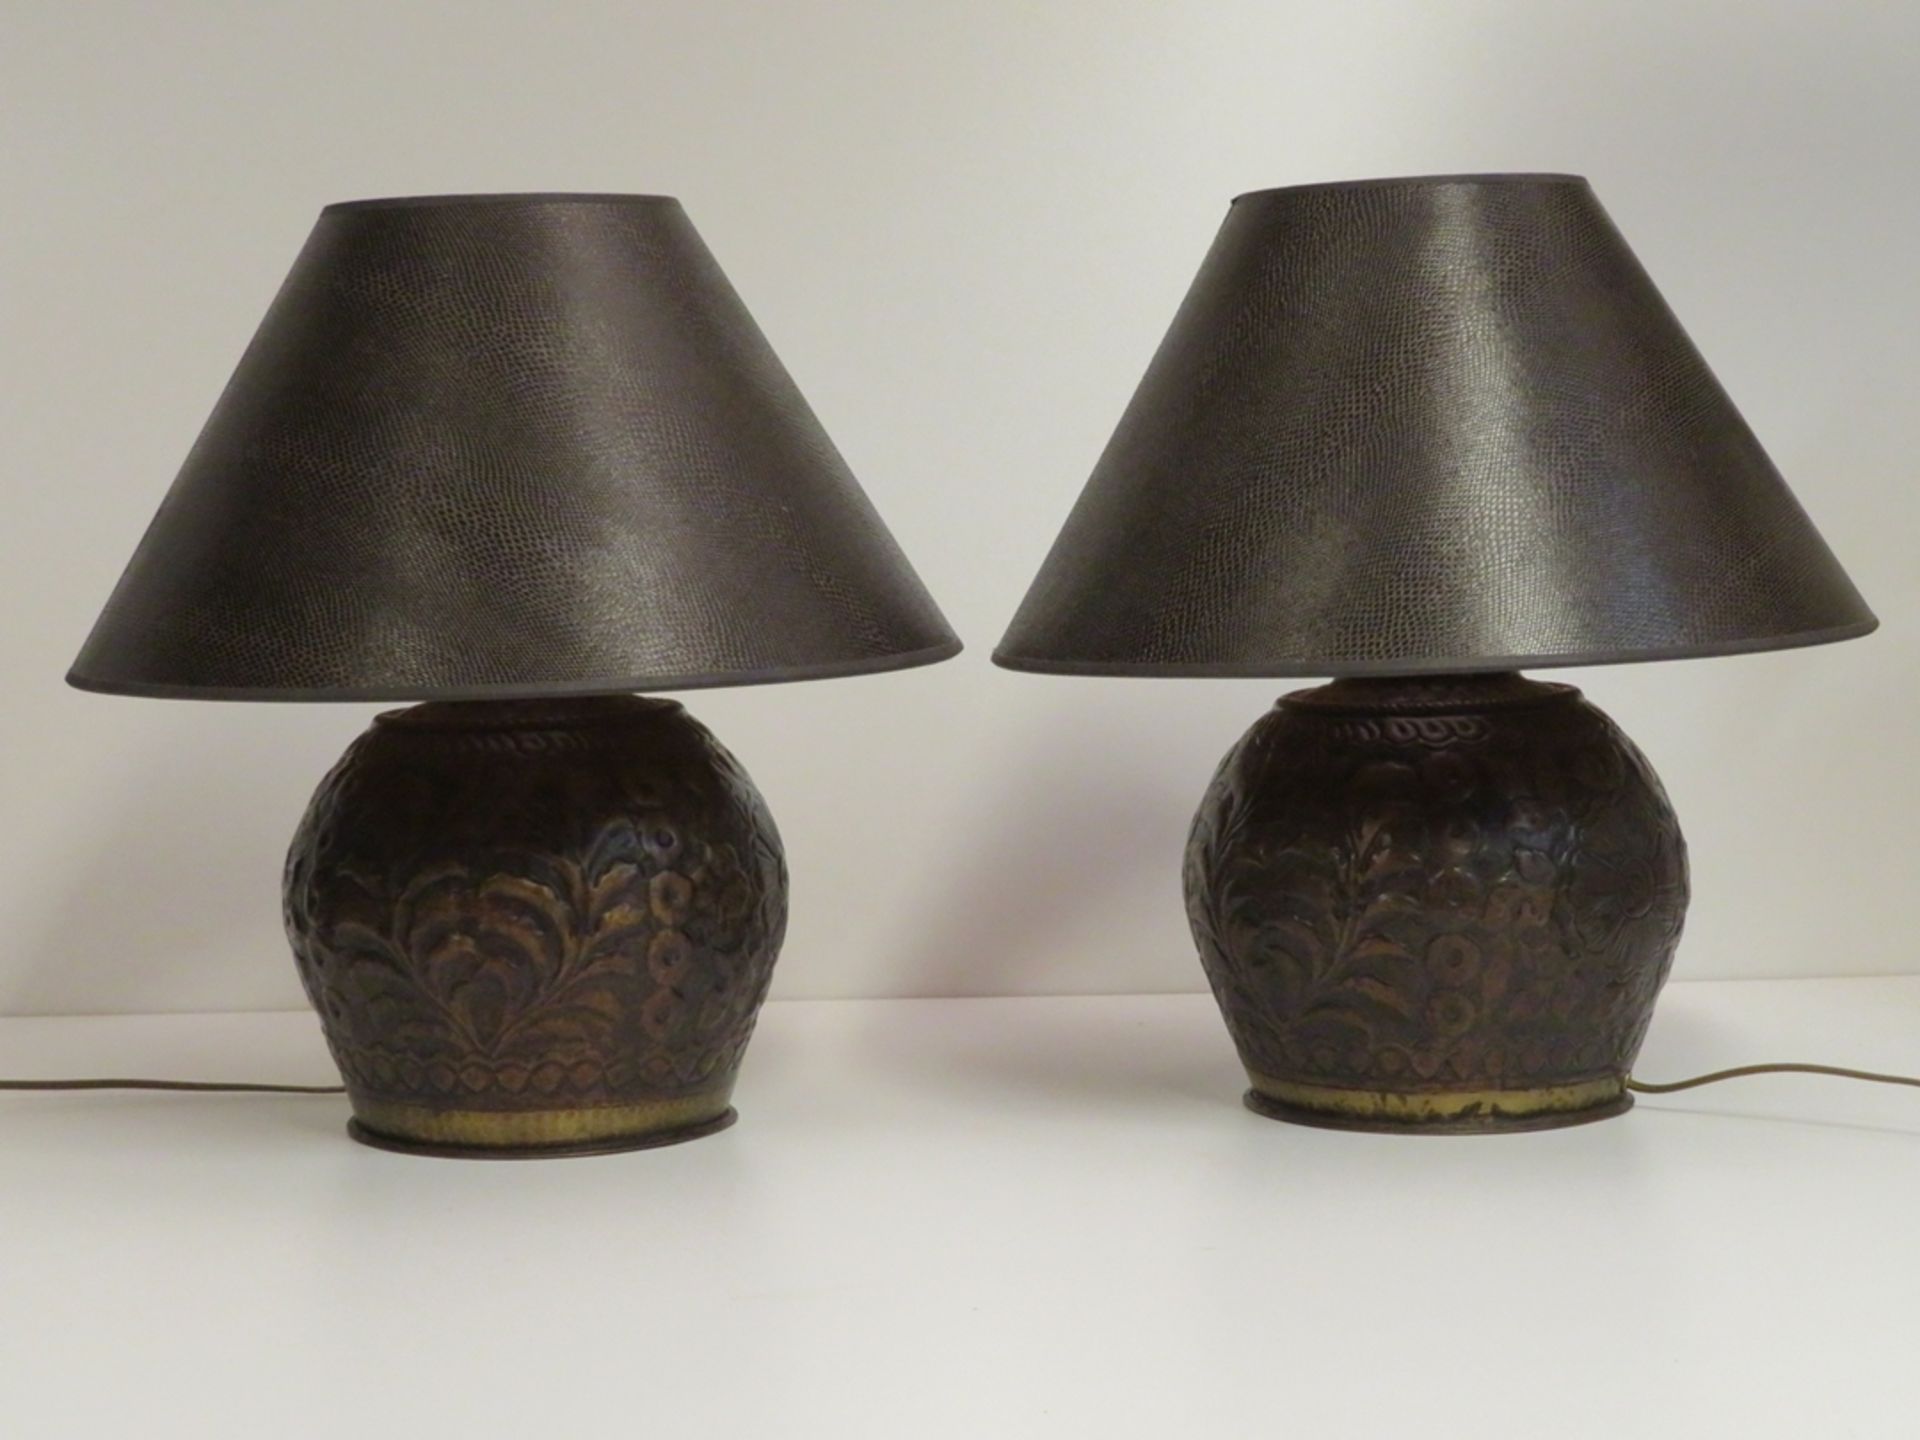 2 Tischlampen, runder reliefierter Messingfuß floral getrieben, Schirme in brauner Schlangenlederop